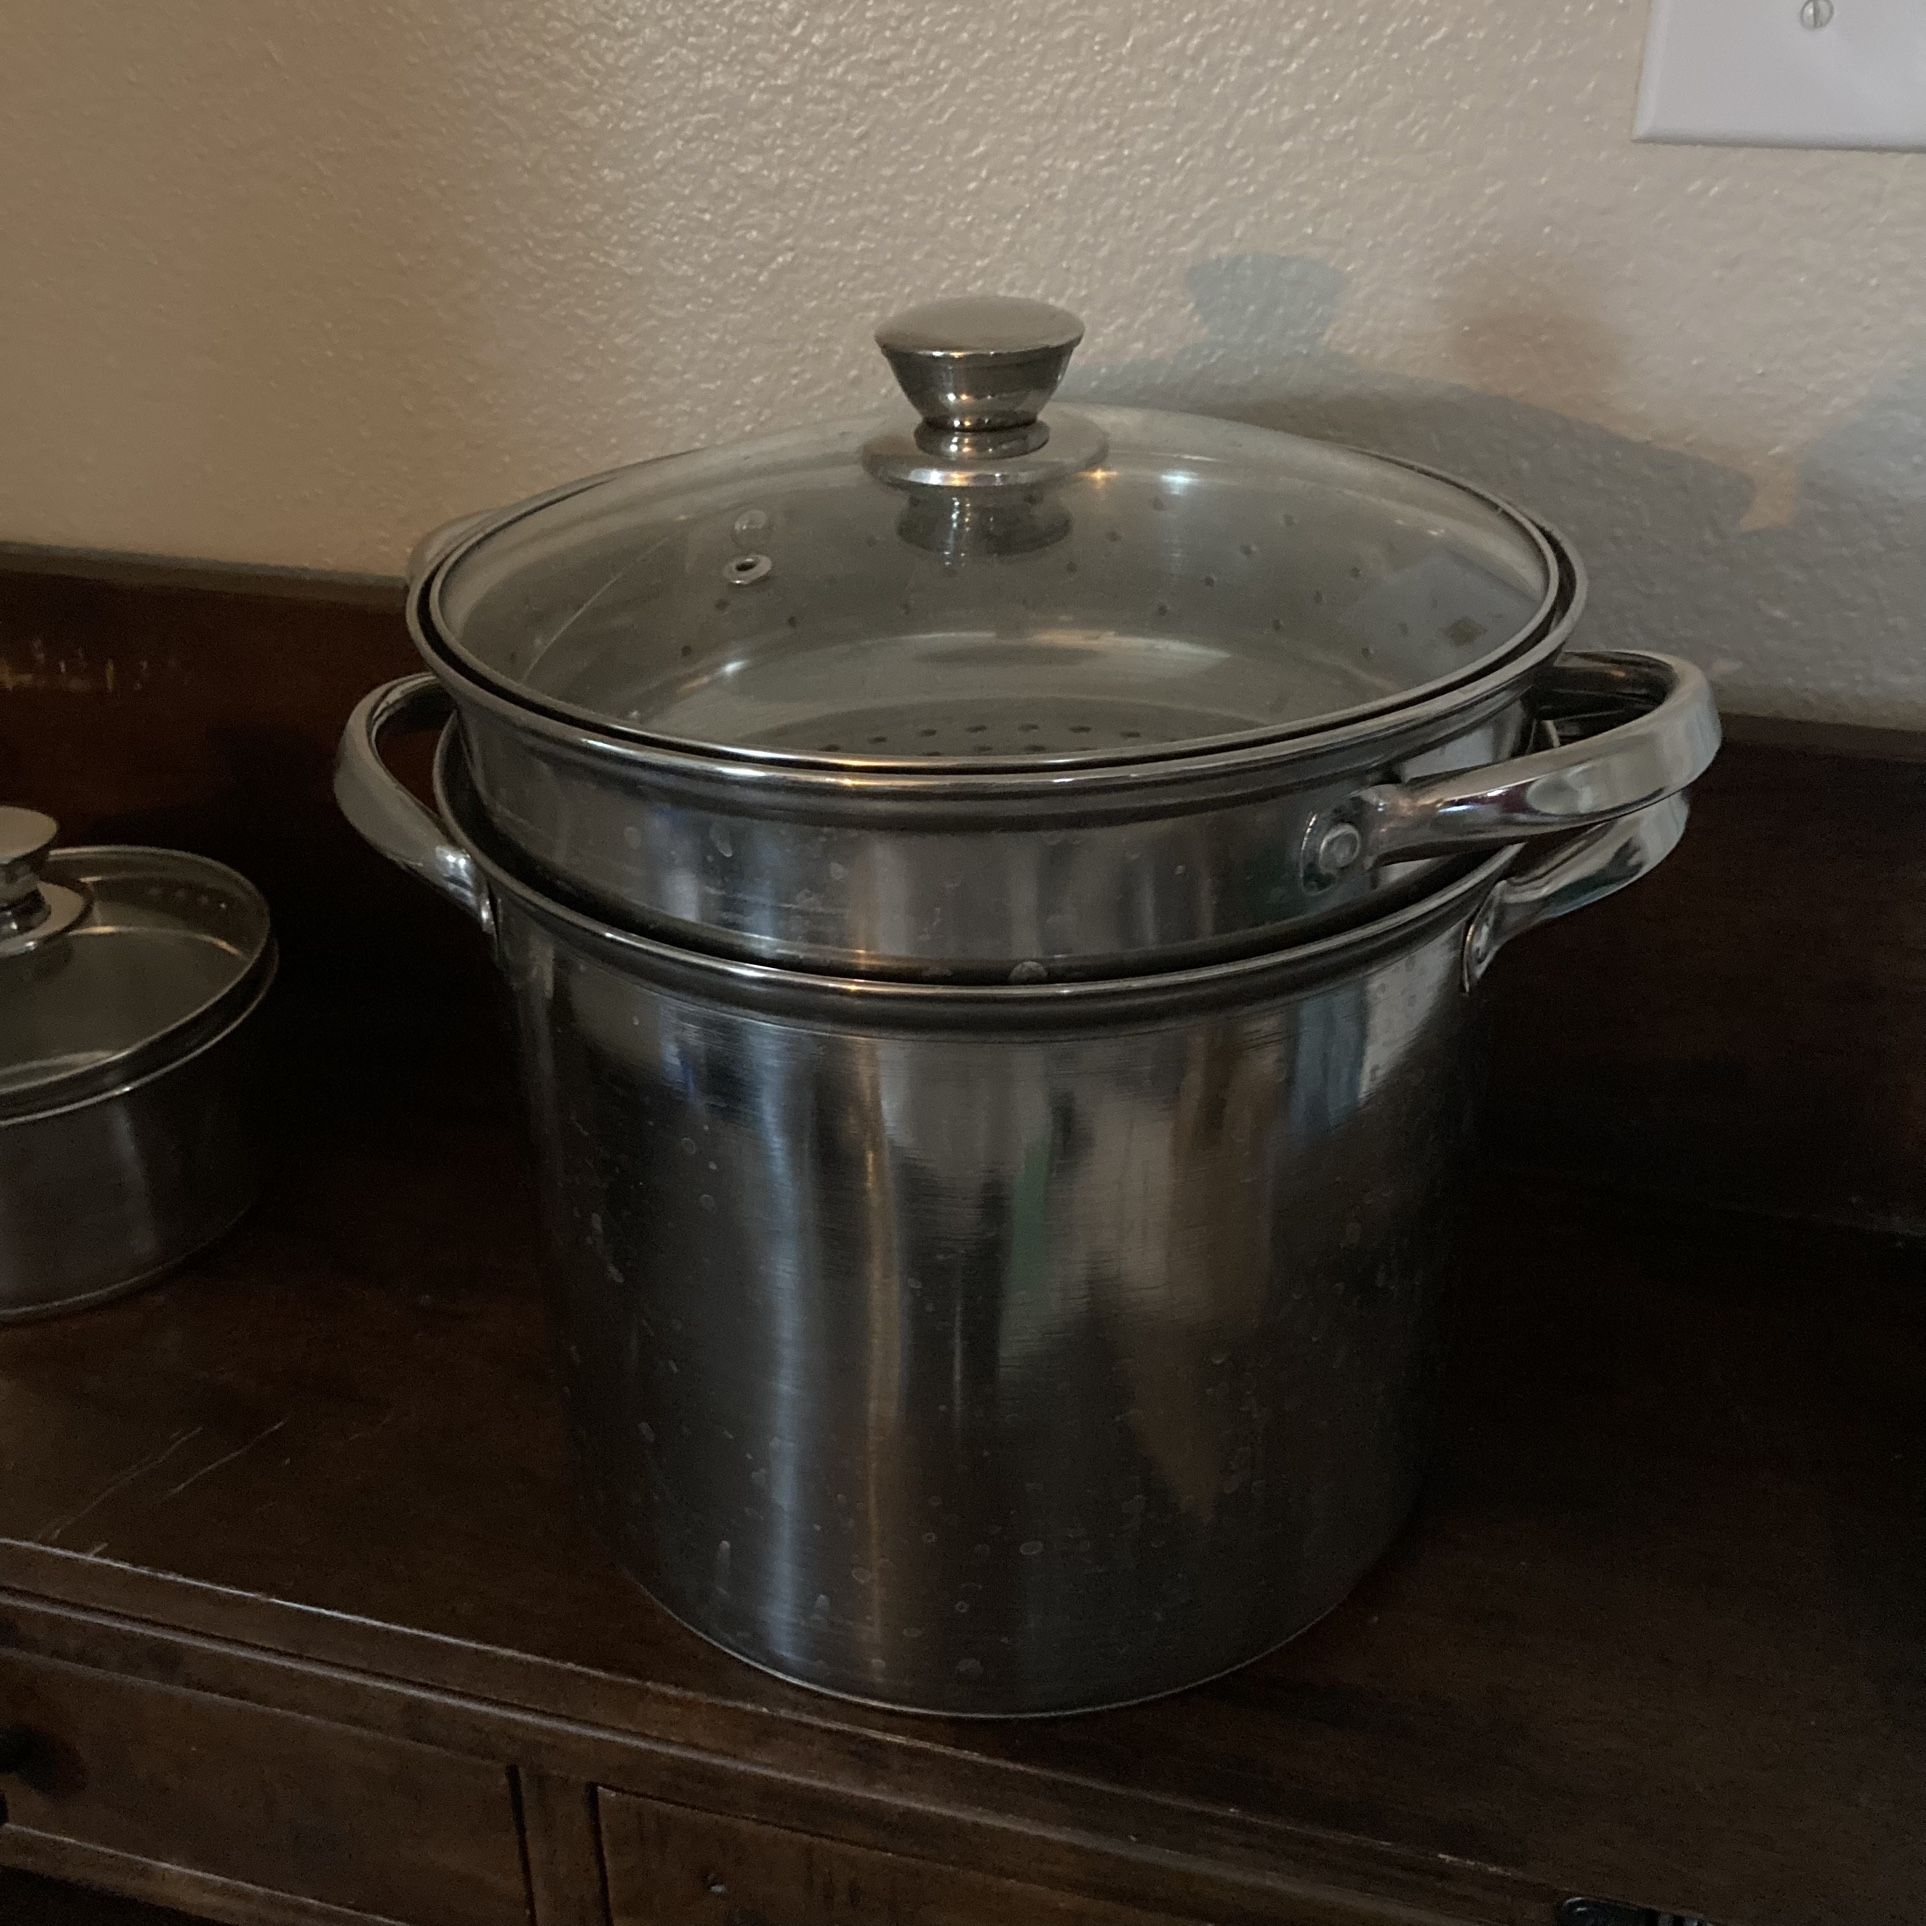 Large 8qt Pot With Steamer Basket In